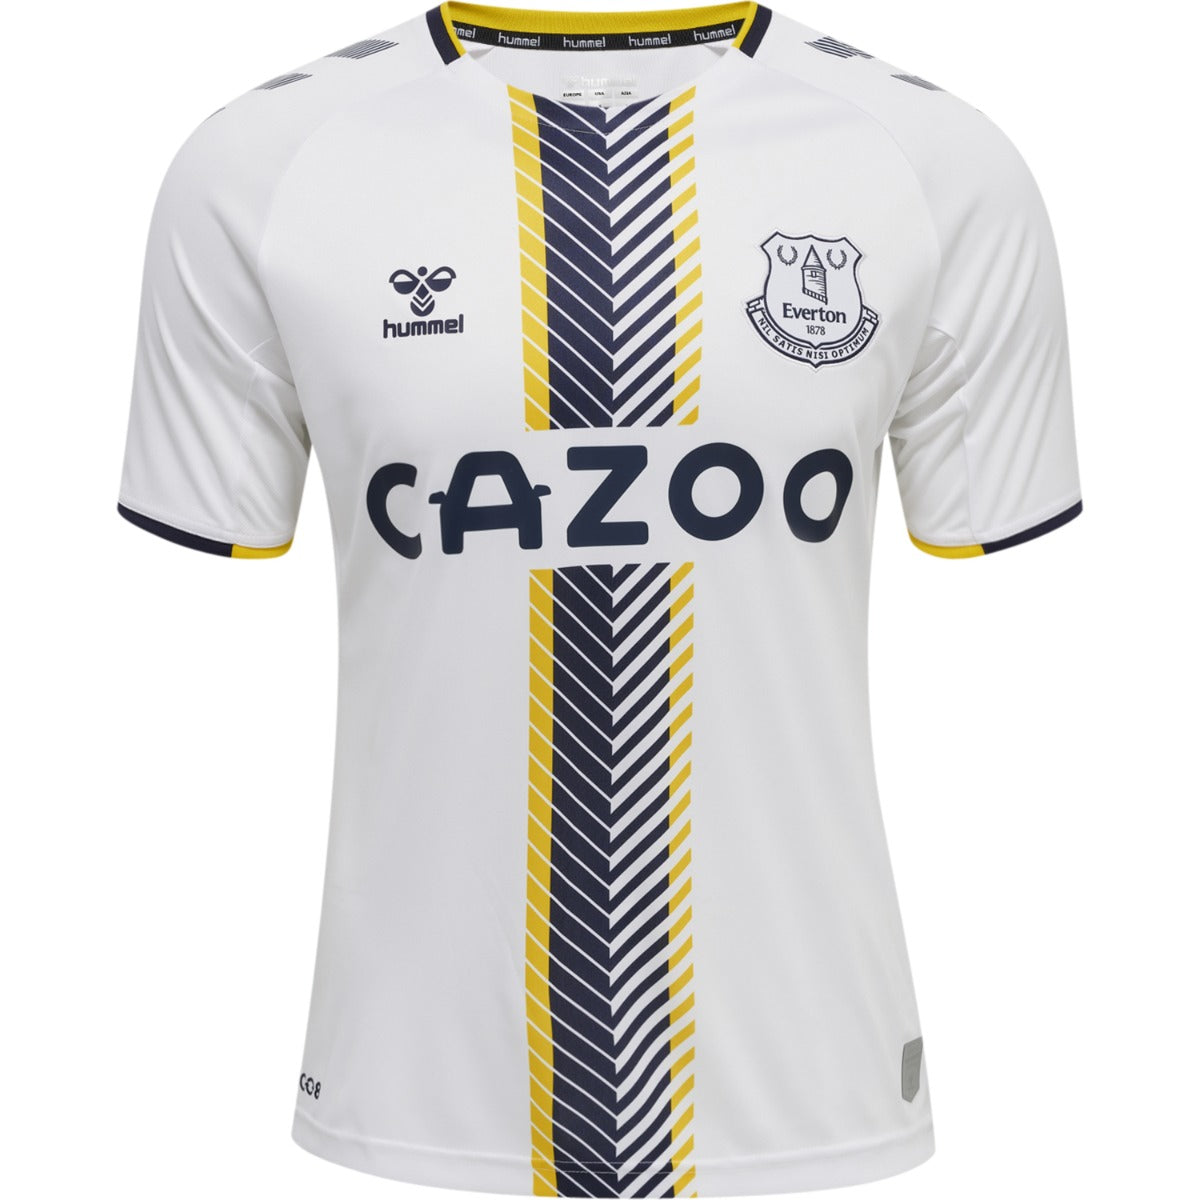 Hummel 2021-22 Everton Third Jersey - White-Black-Yellow (Front)